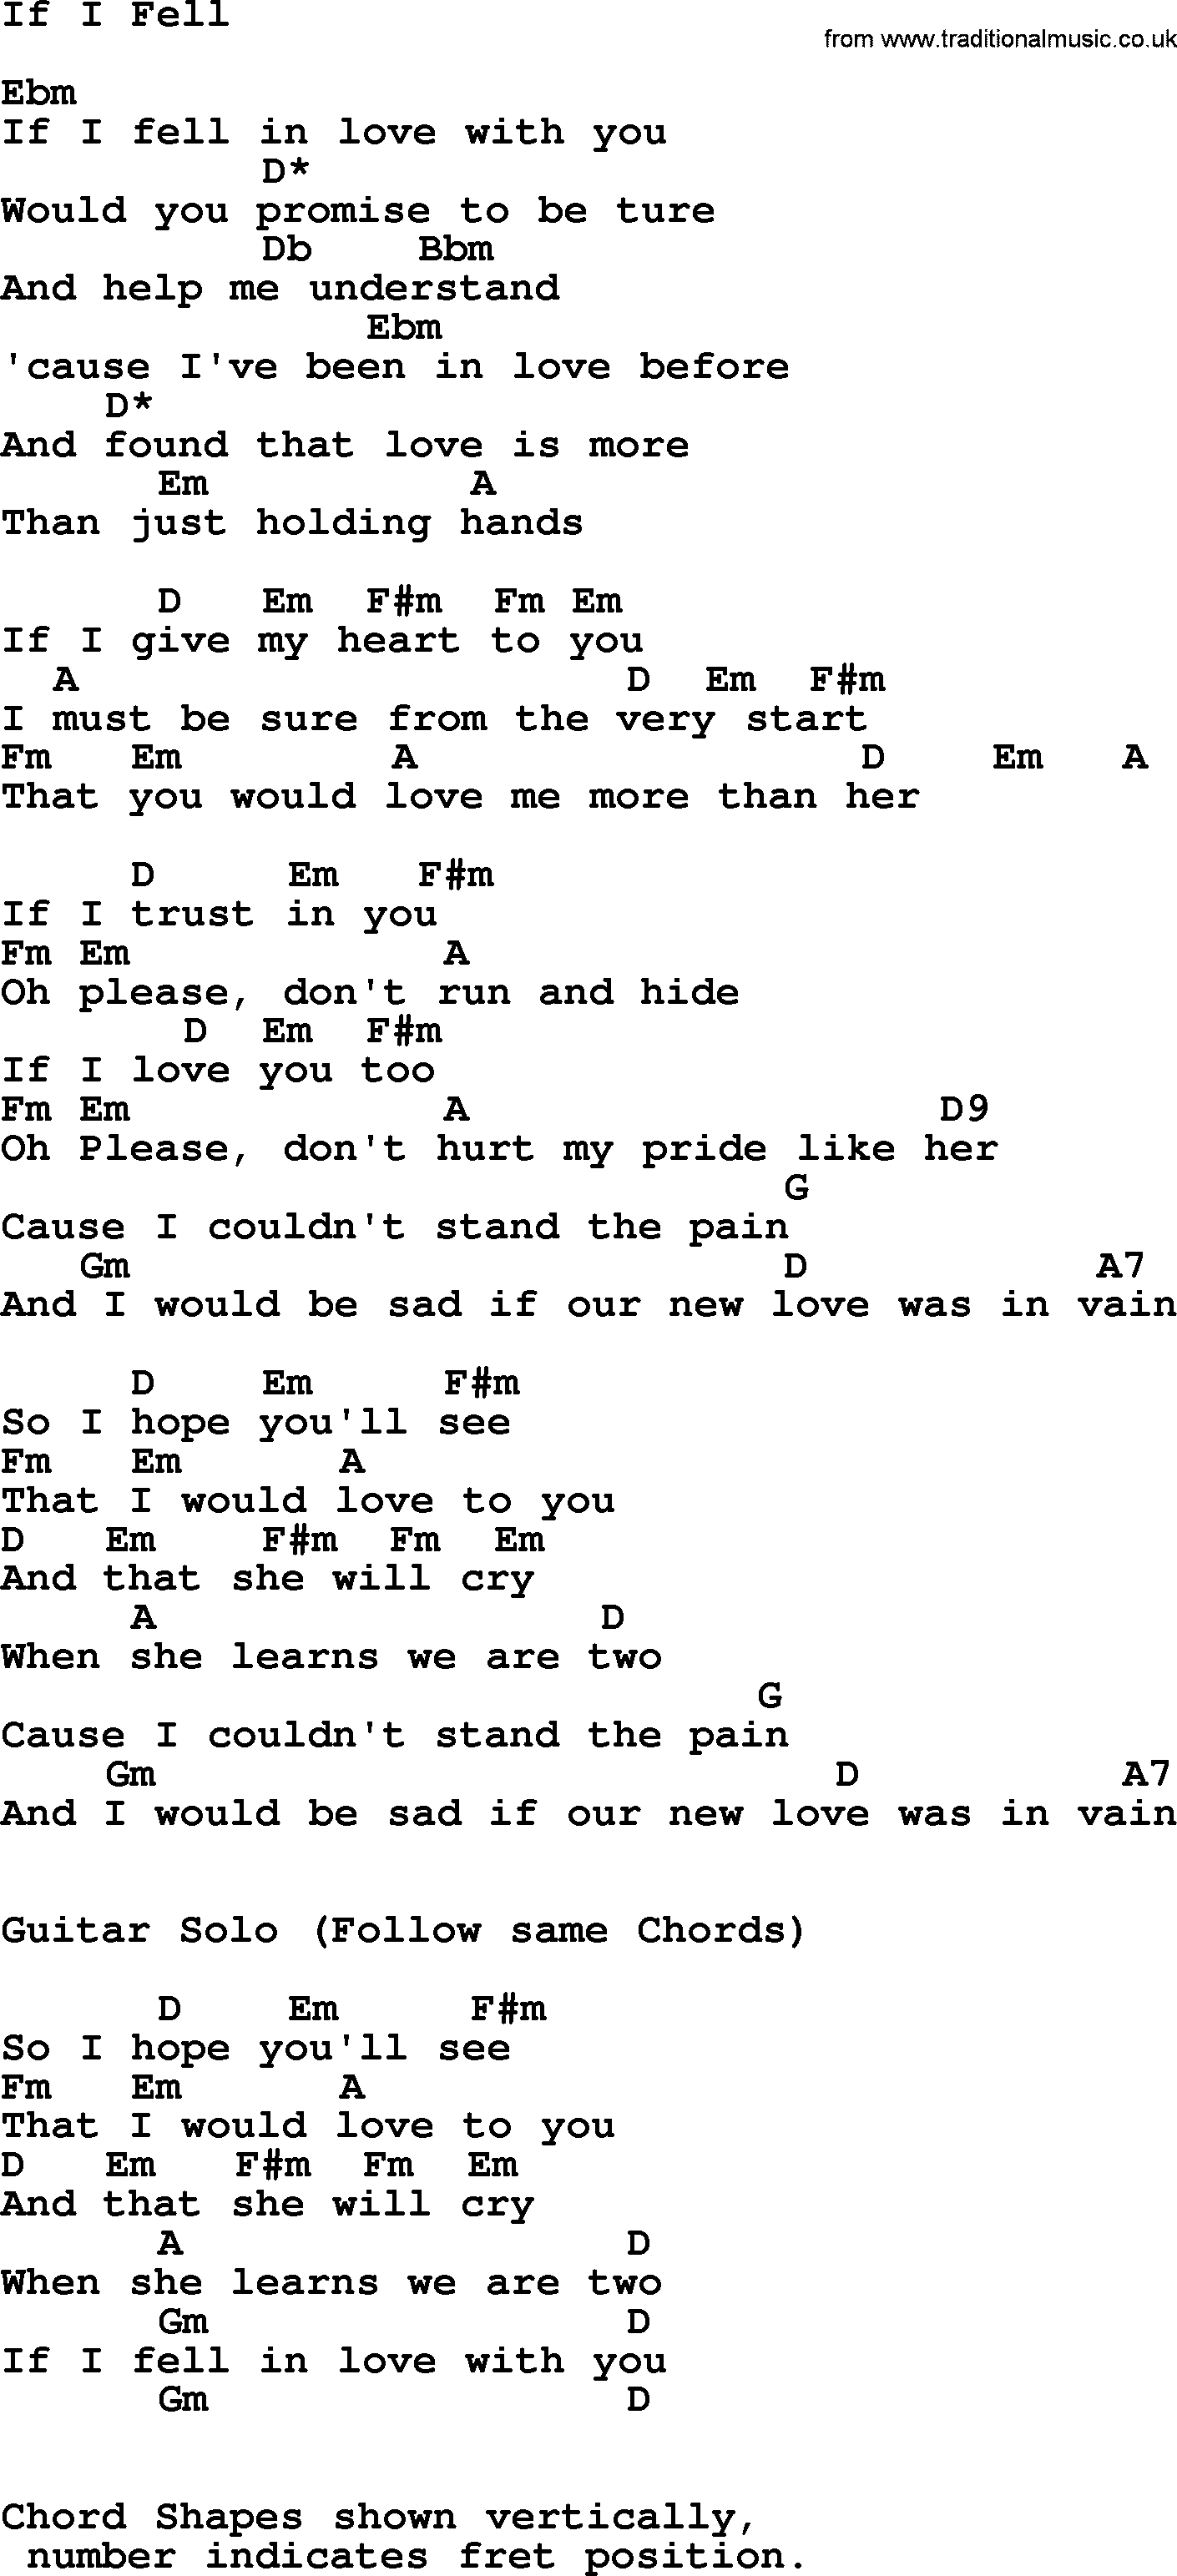 Reba McEntire song: If I Fell, lyrics and chords